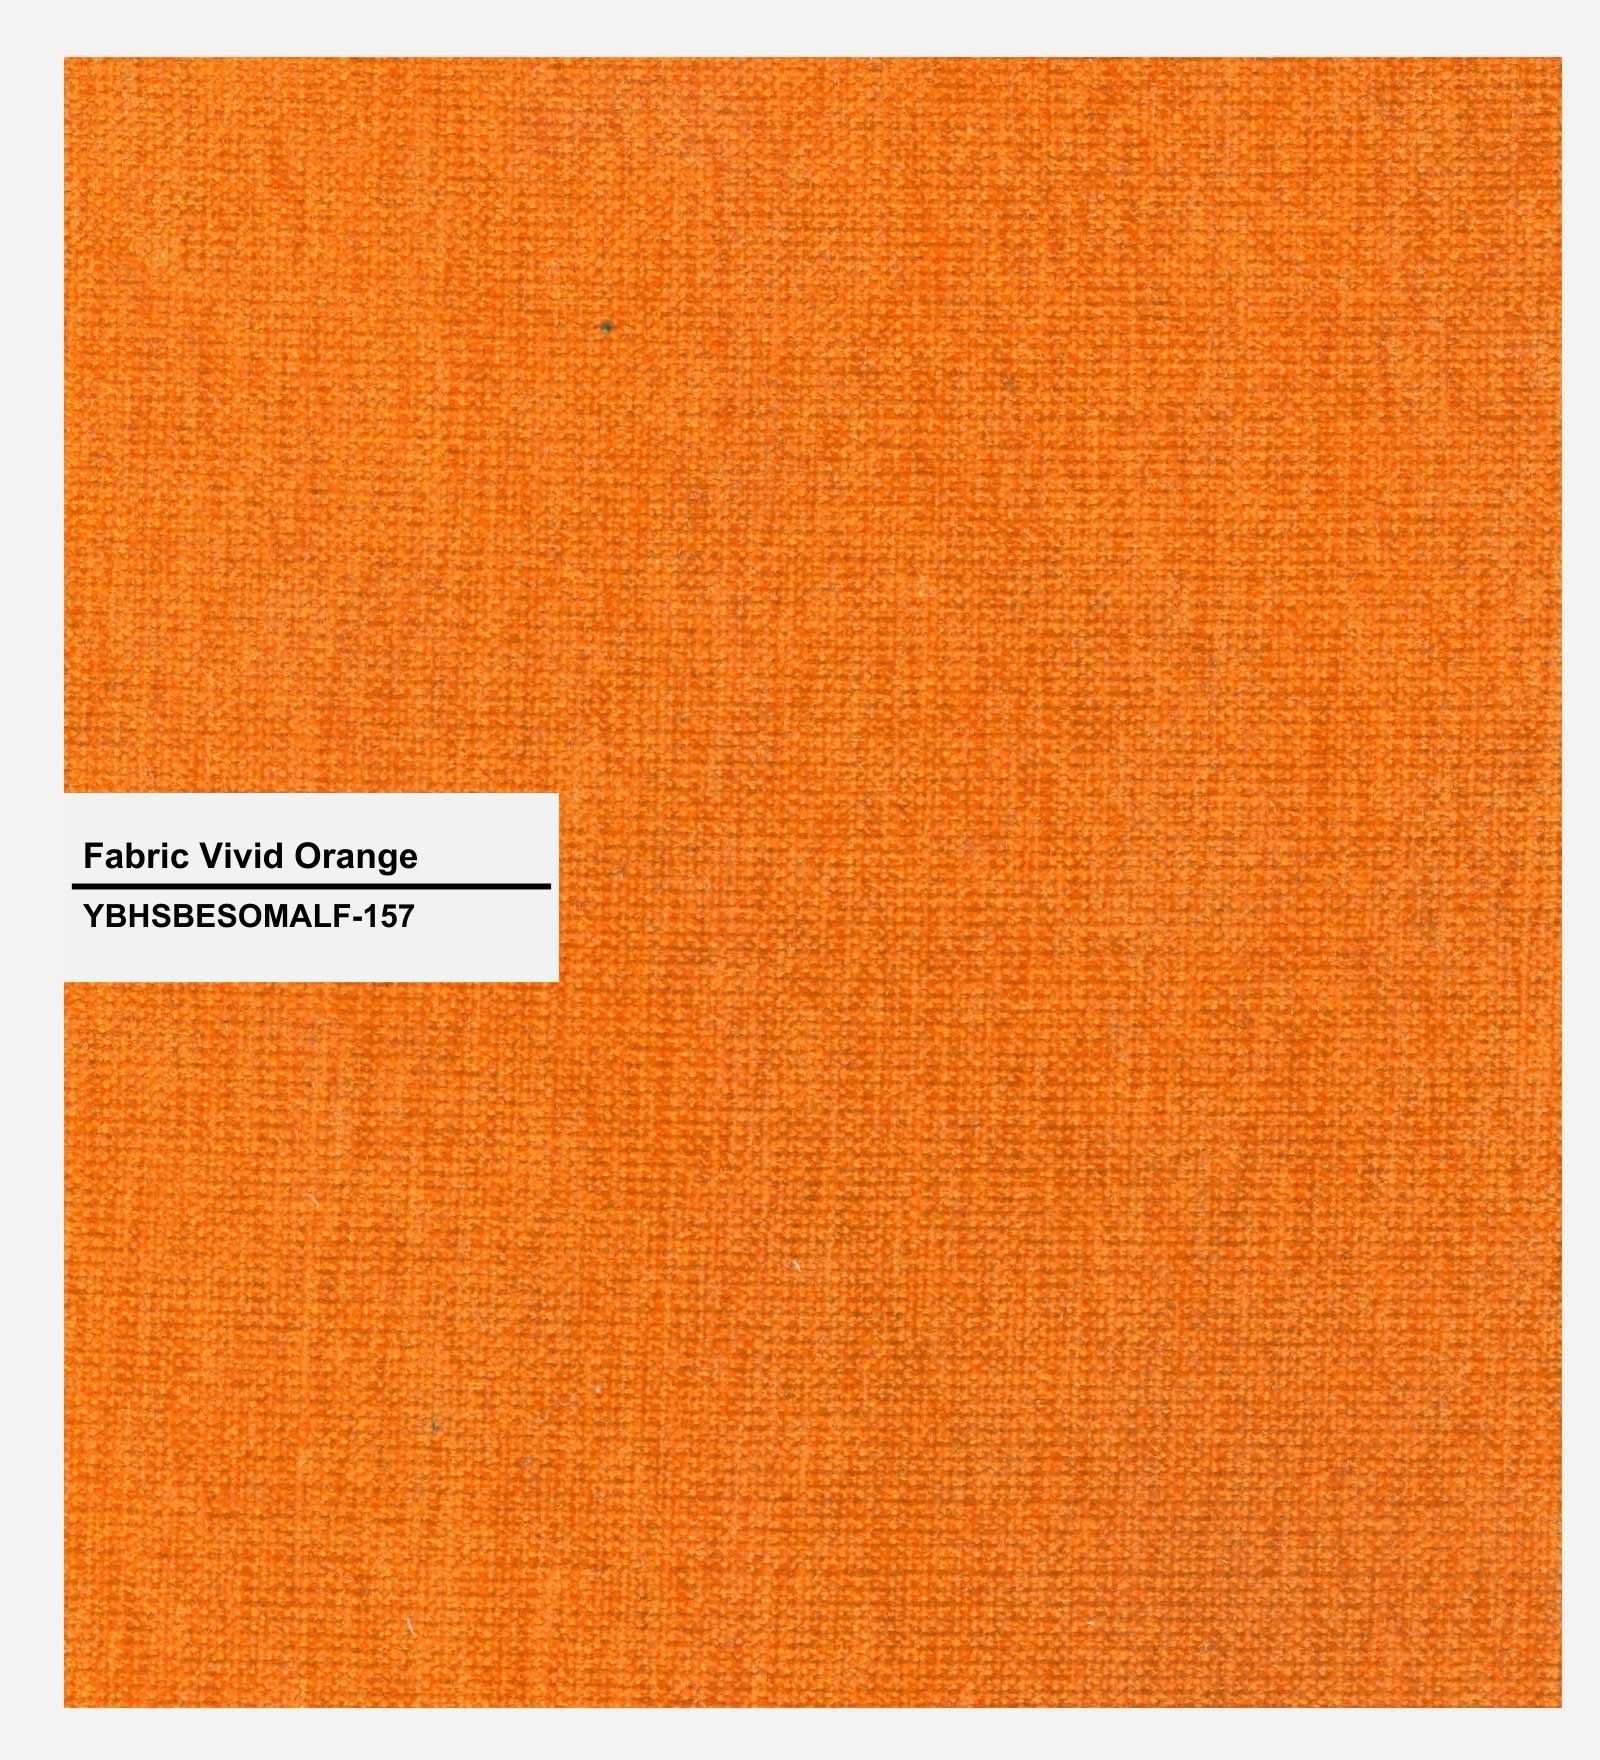 Olsen Fabric Arm Chair in Vivid Orange Colour